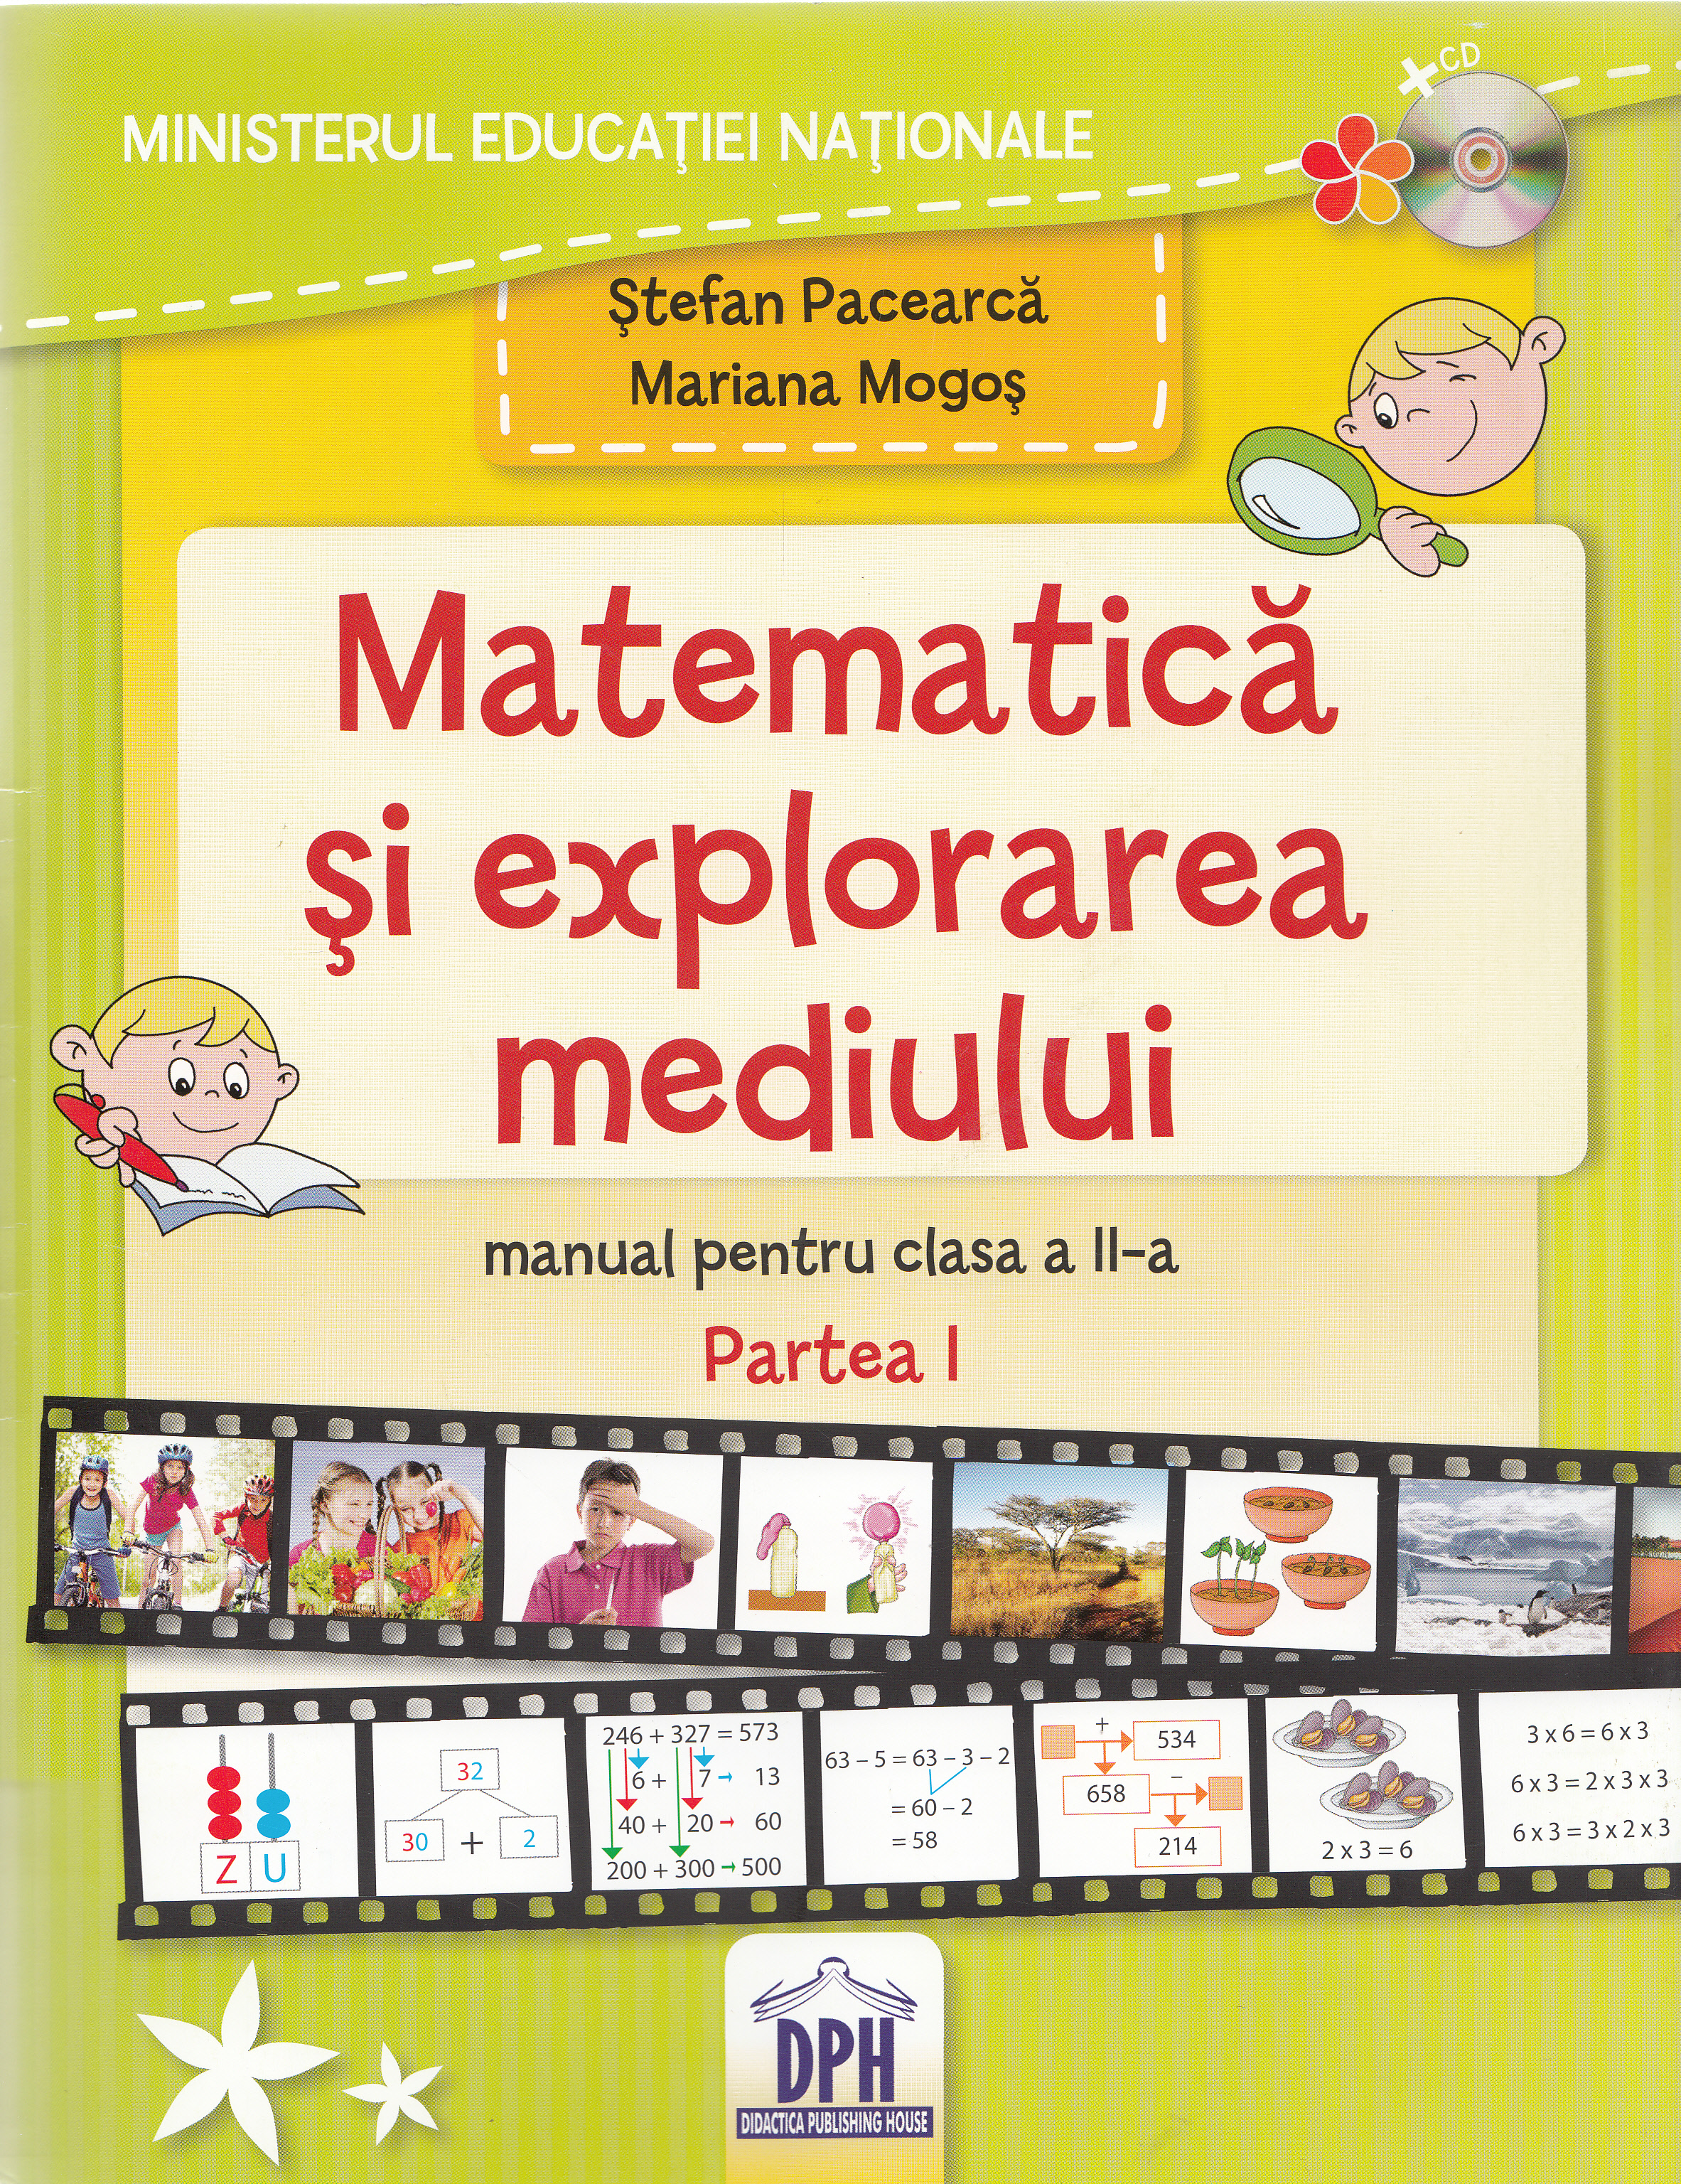 Matematica si explorarea mediului - Clasa a 2-a. Partea 1 - Manual - Stefan Pacearca, Mariana Mogos